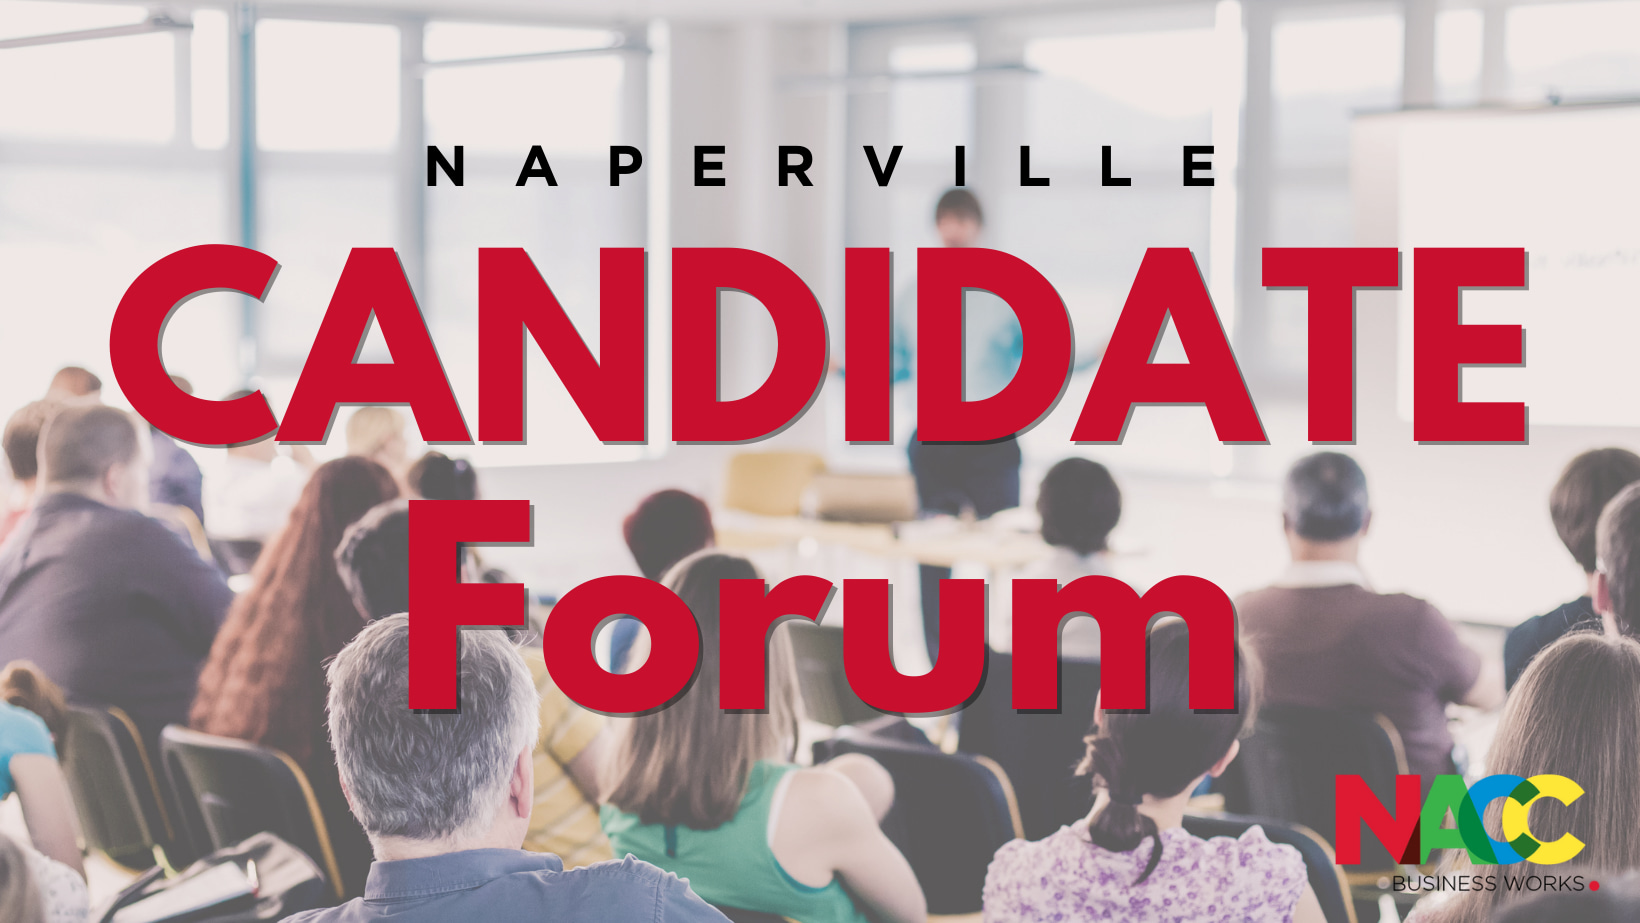 Naperville Candidate Forum Event Registration